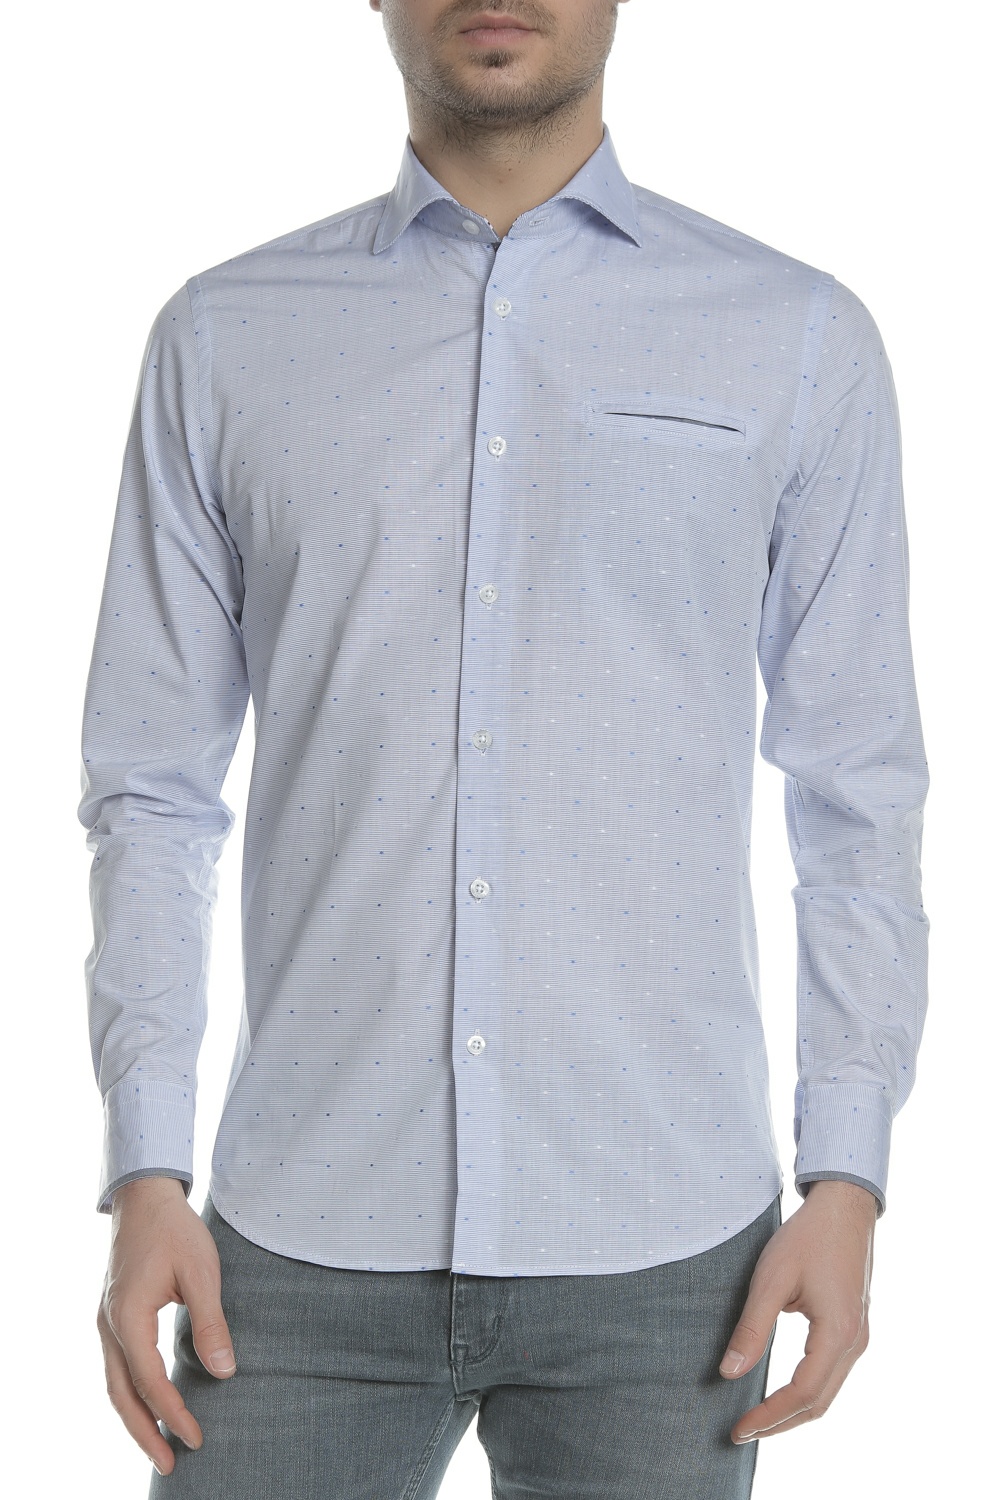 SSEINSE - Ανδρικό μακρυμάνικο πουκάμισο SSEINSE γαλάζιο Ανδρικά/Ρούχα/Πουκάμισα/Μακρυμάνικα